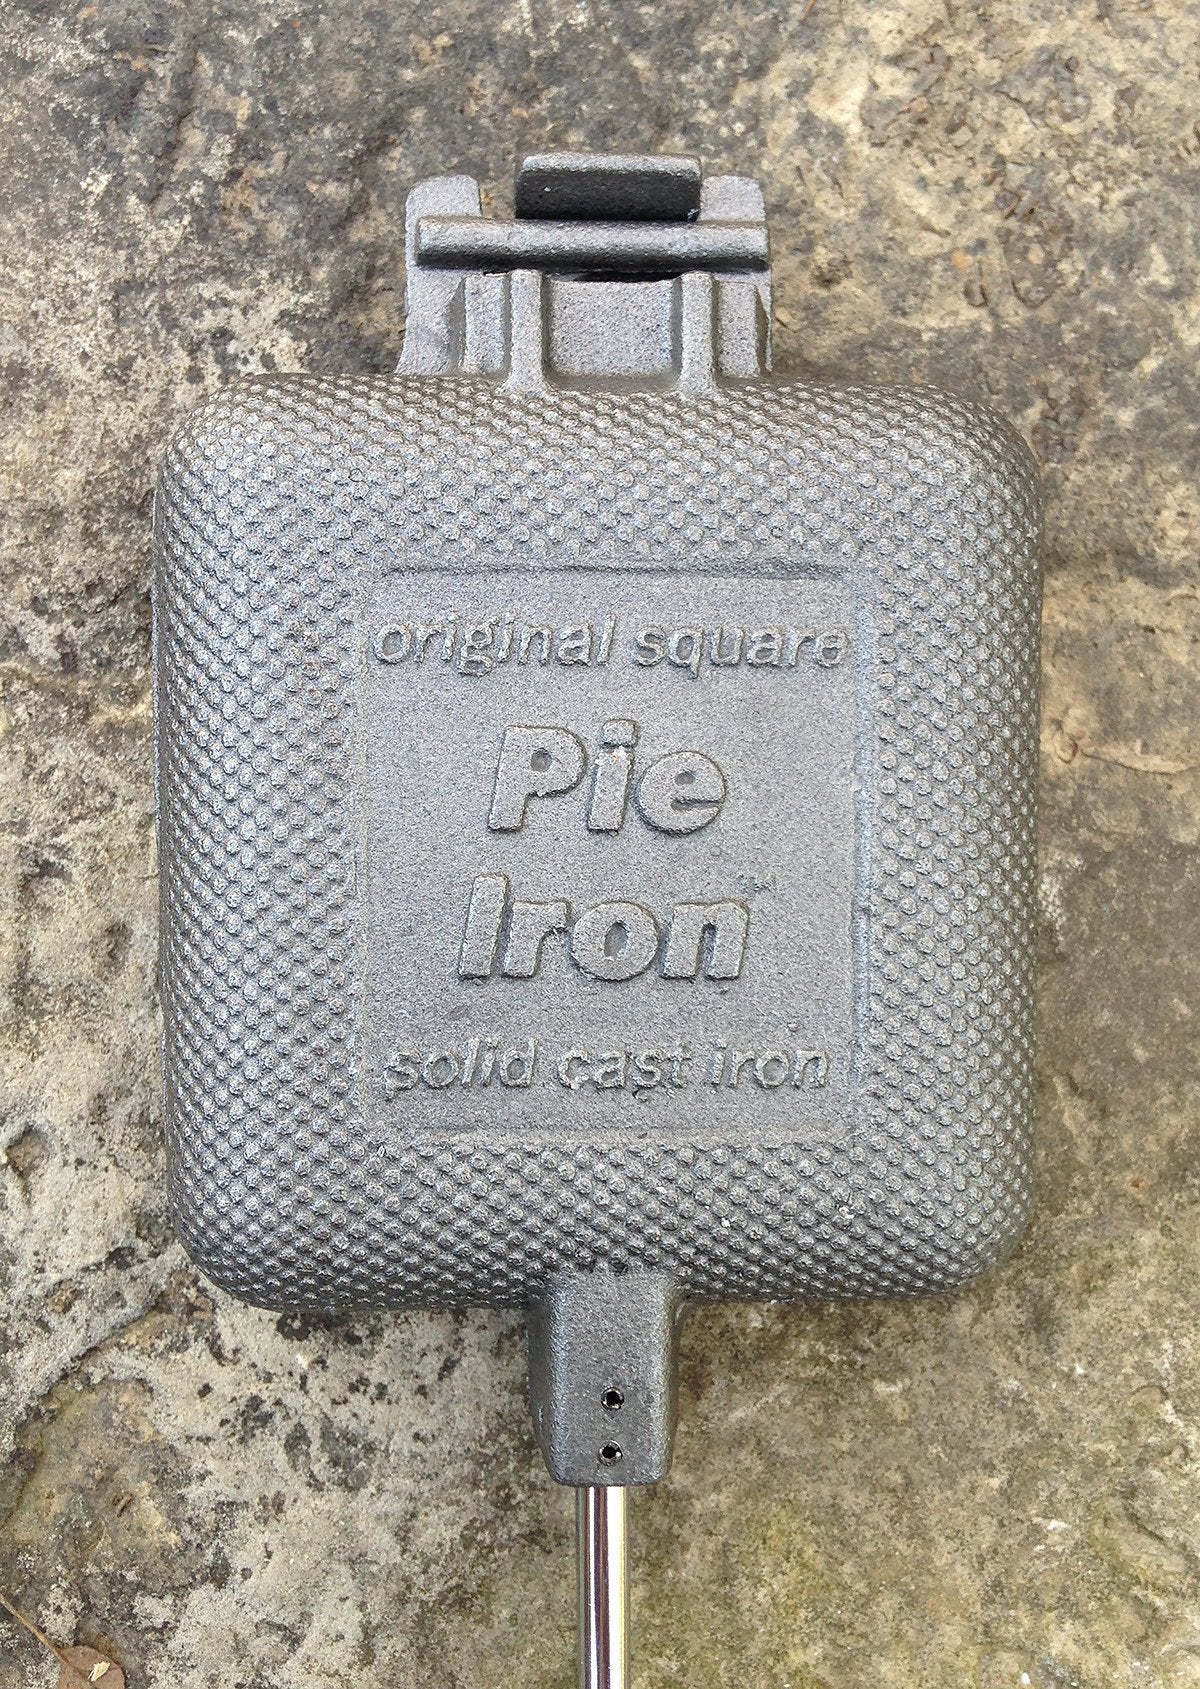 Square Pie Iron - Cast Iron, Rome Industries #1705 – romeindustries